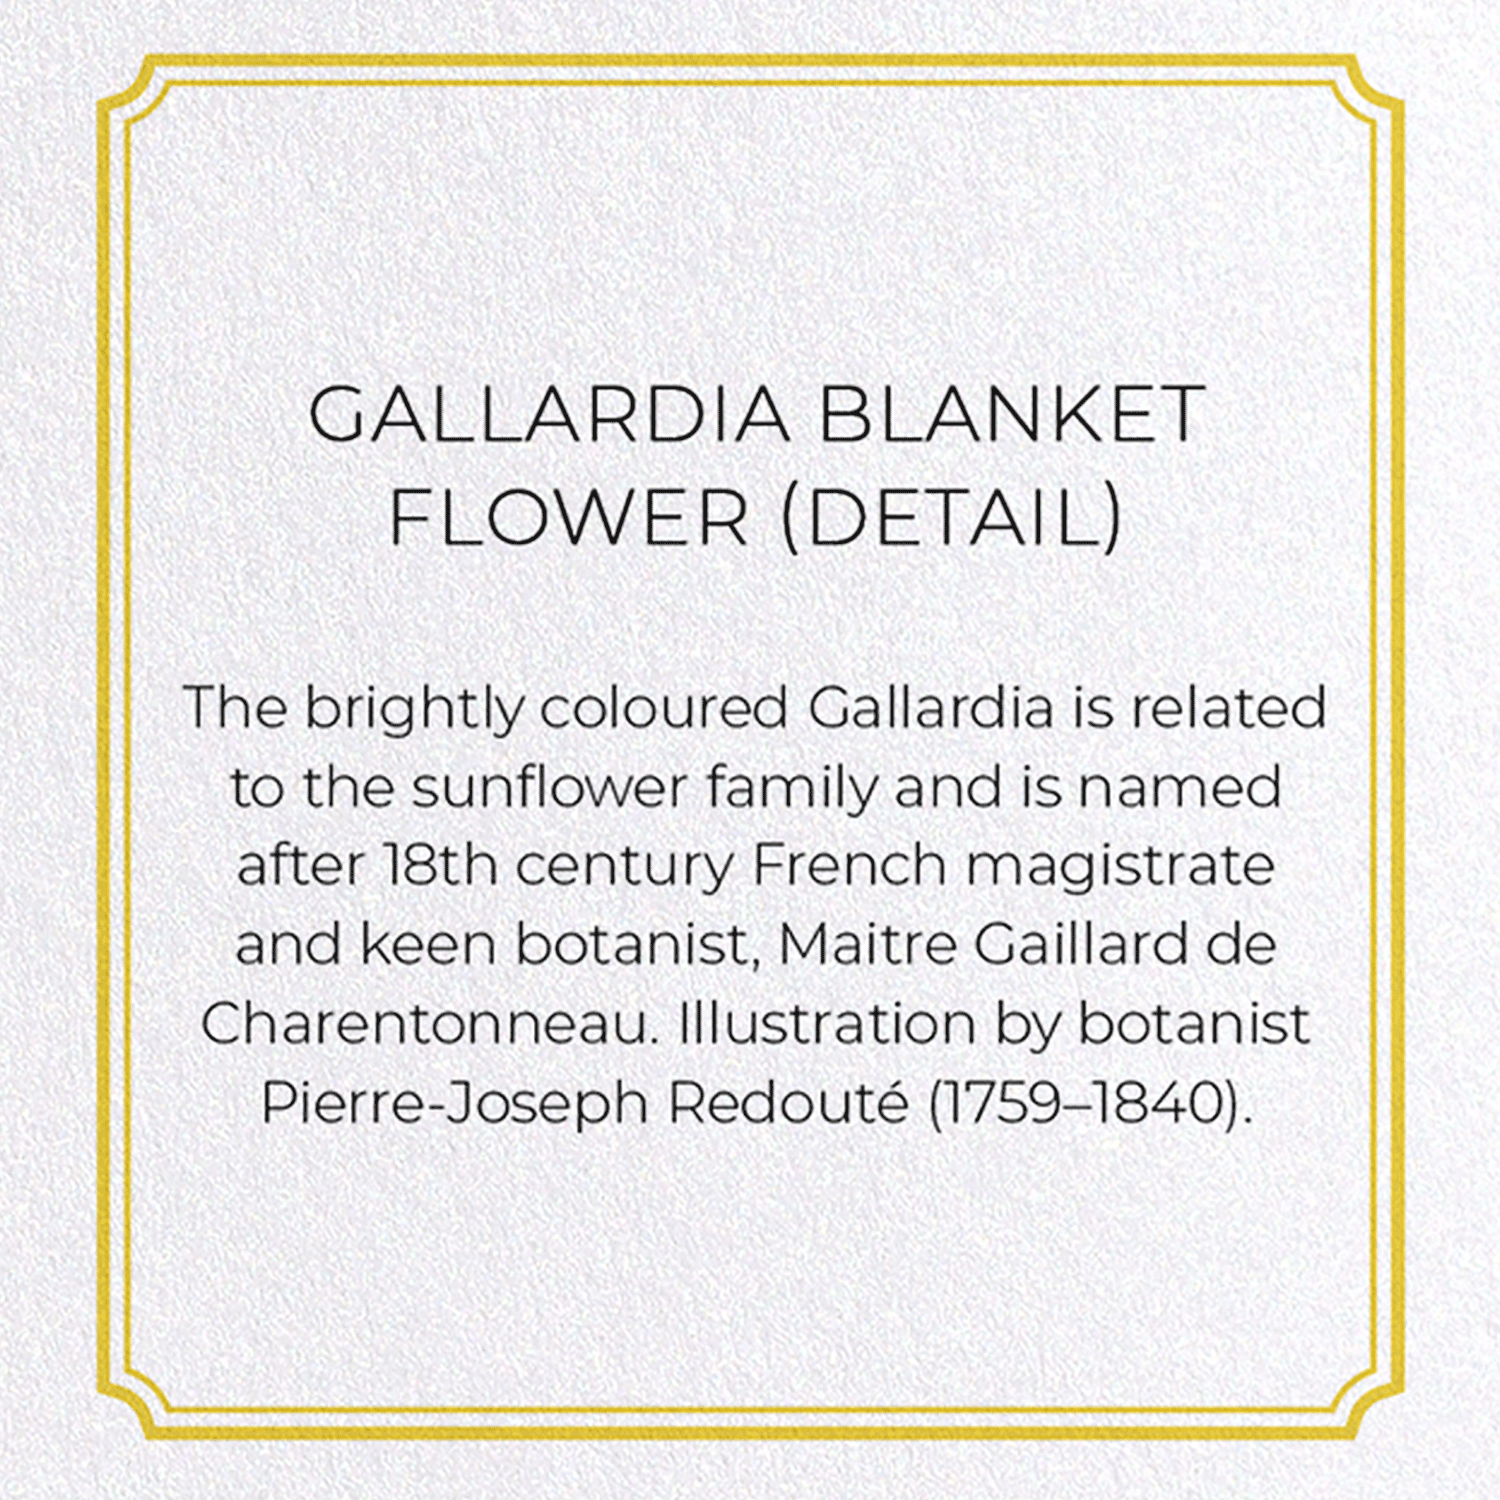 GALLARDIA BLANKET FLOWER